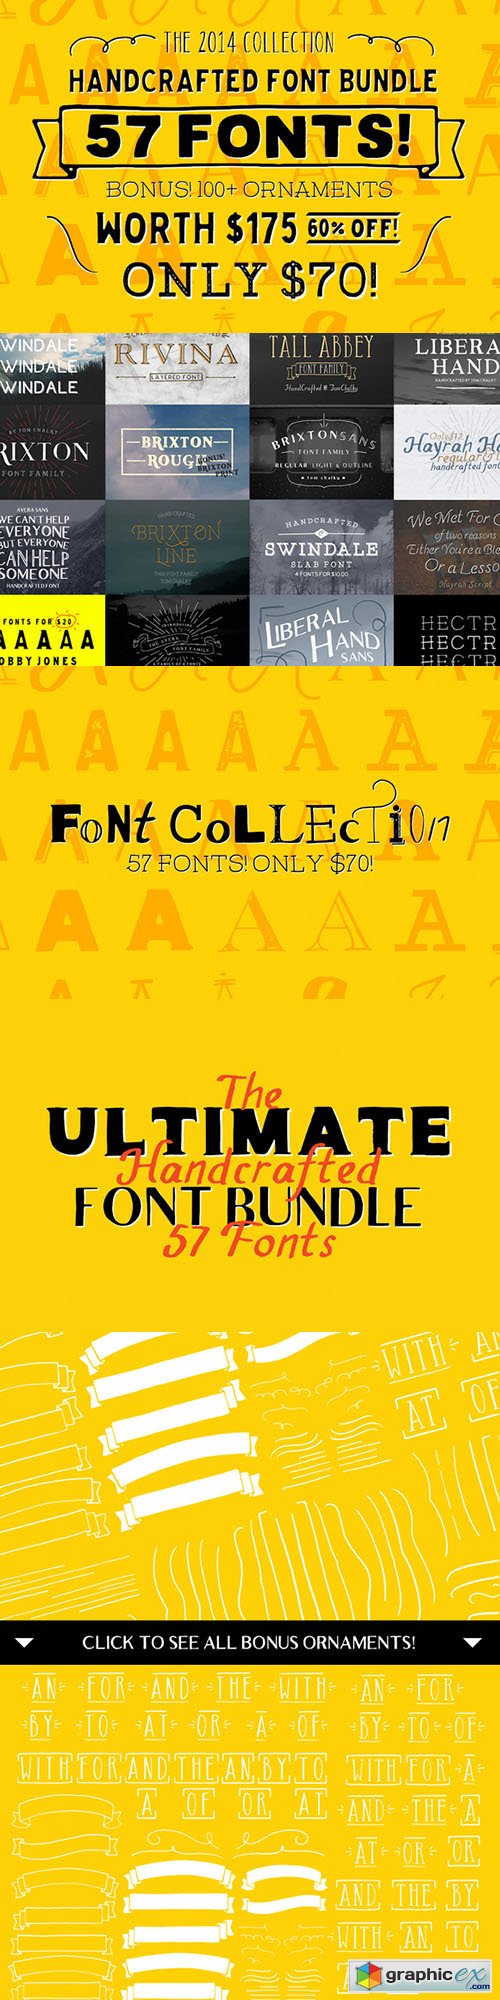 2014 Mega Font Bundle + Extras!